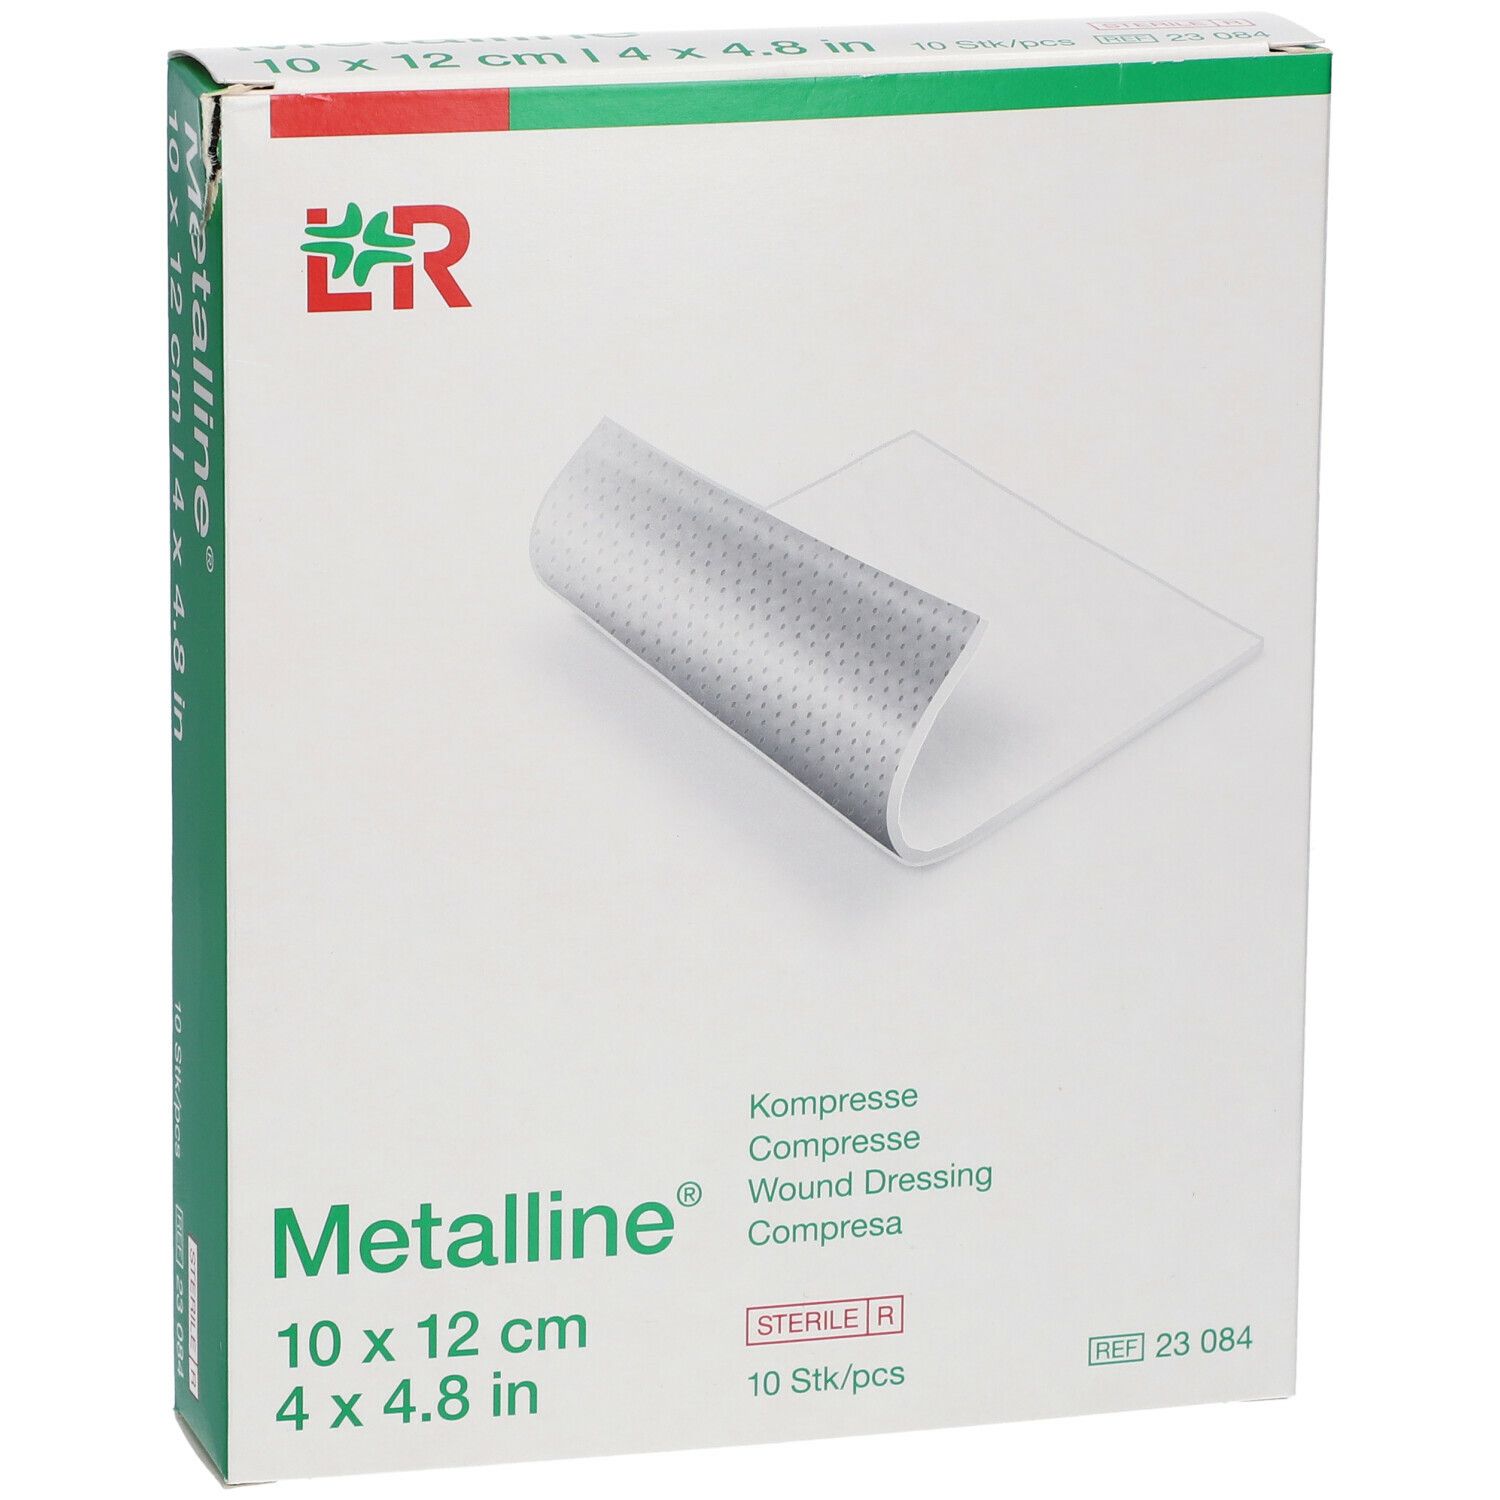 Metalline® Kompresse 10 cm x 12 cm steril